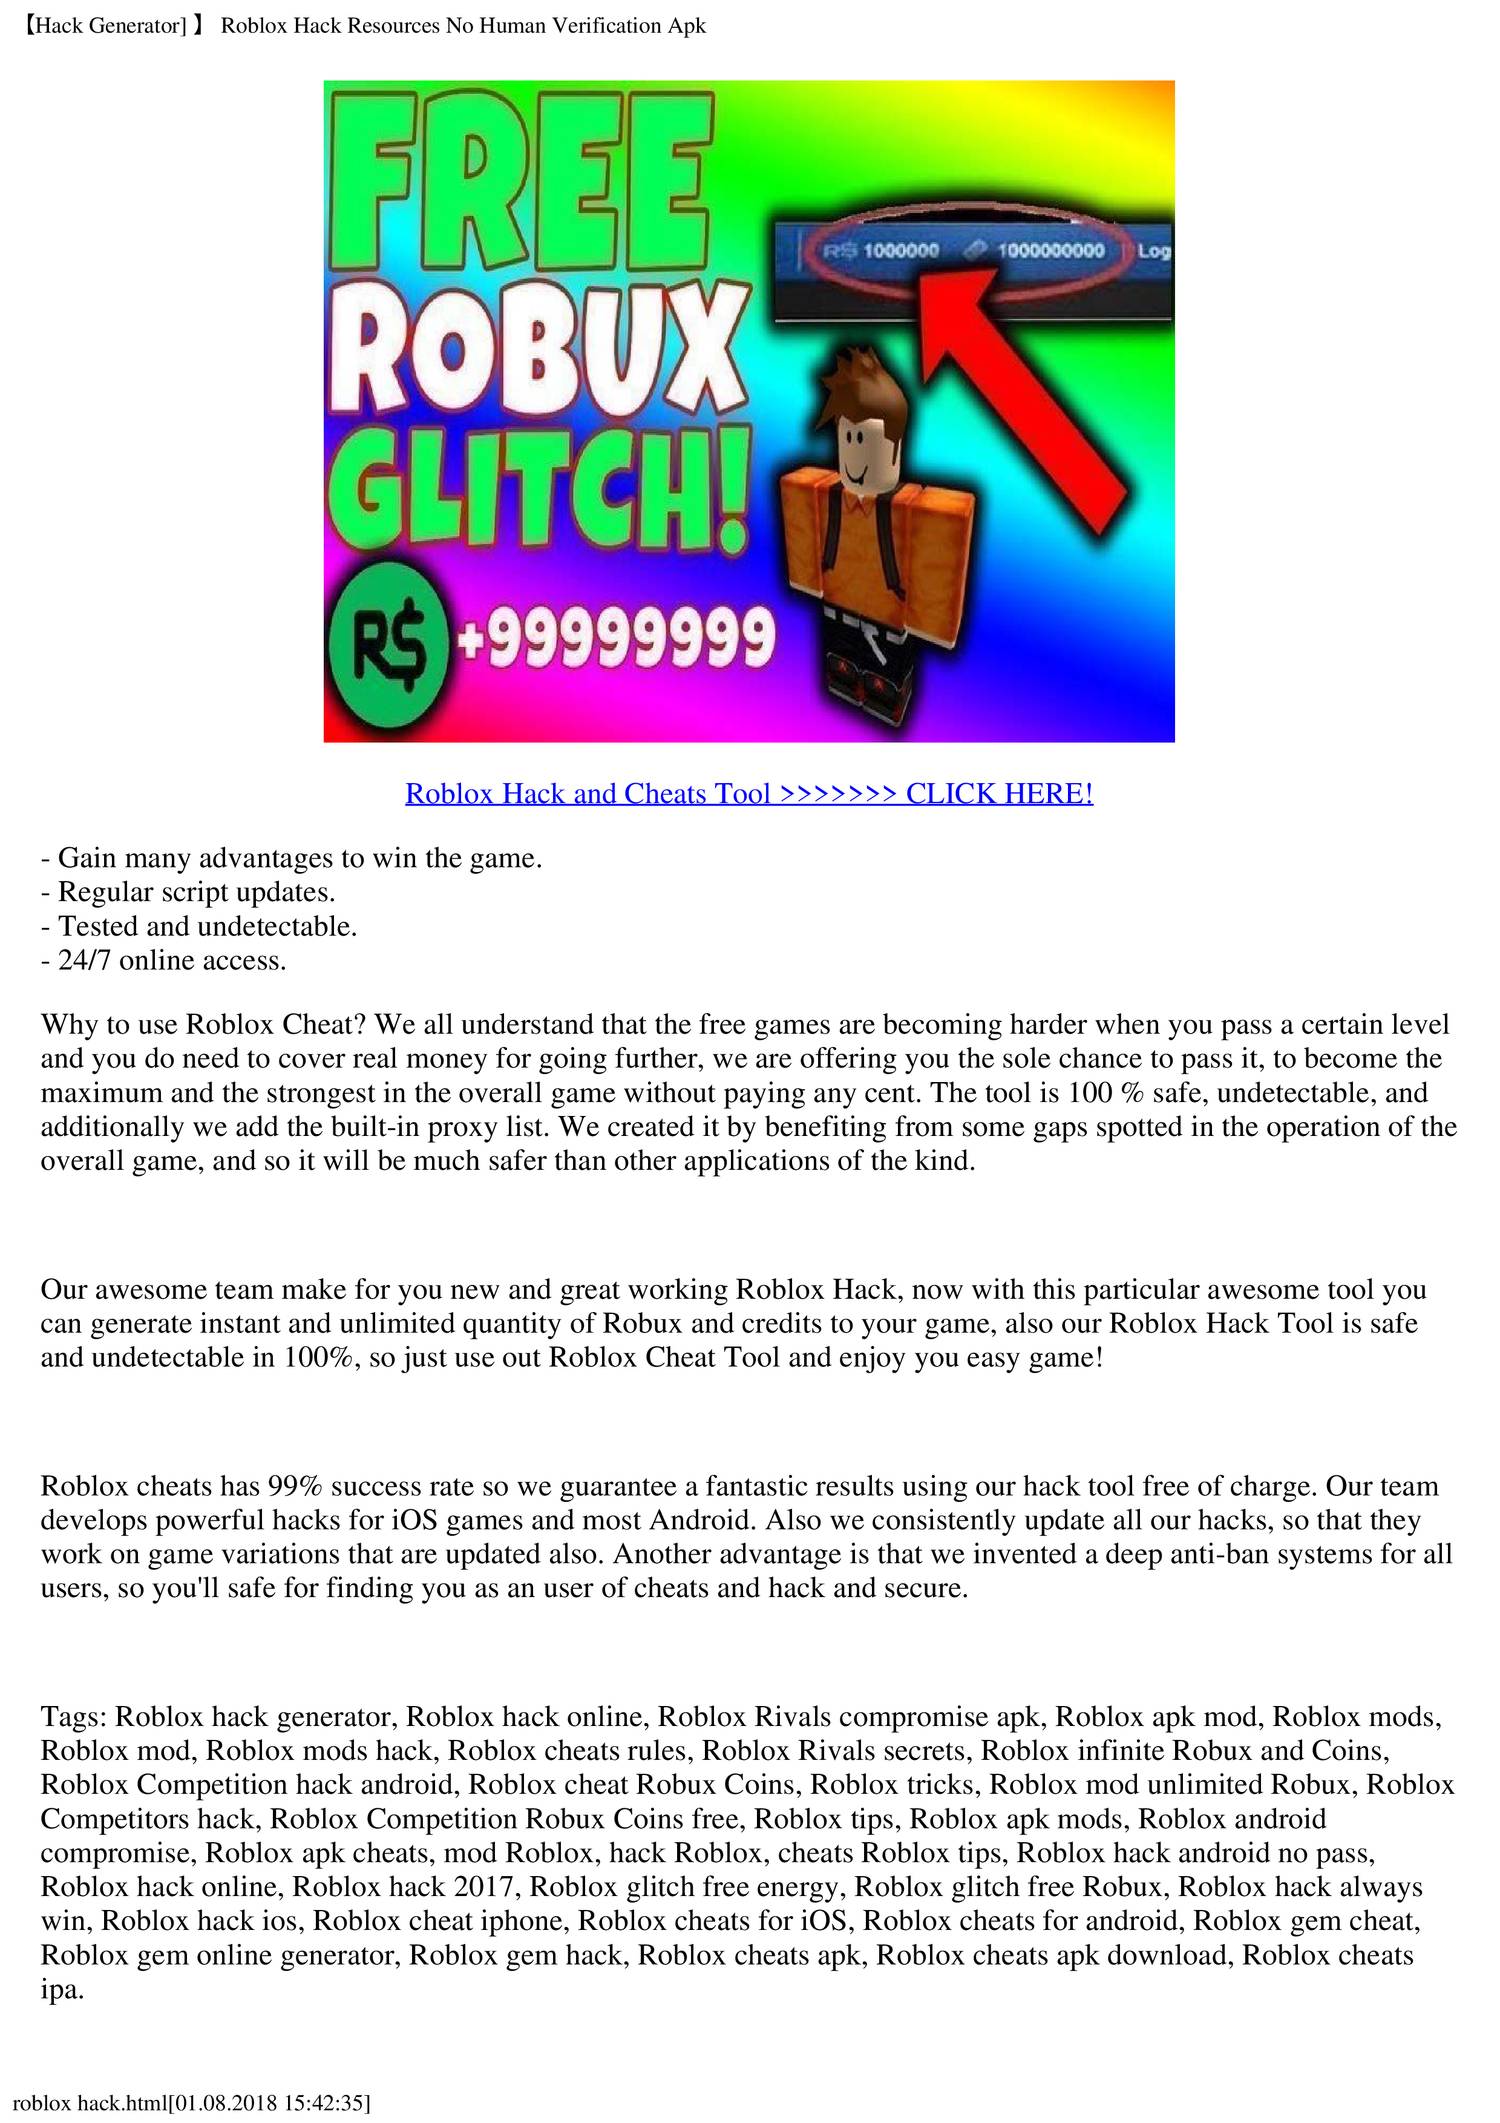 Robux Hack - 